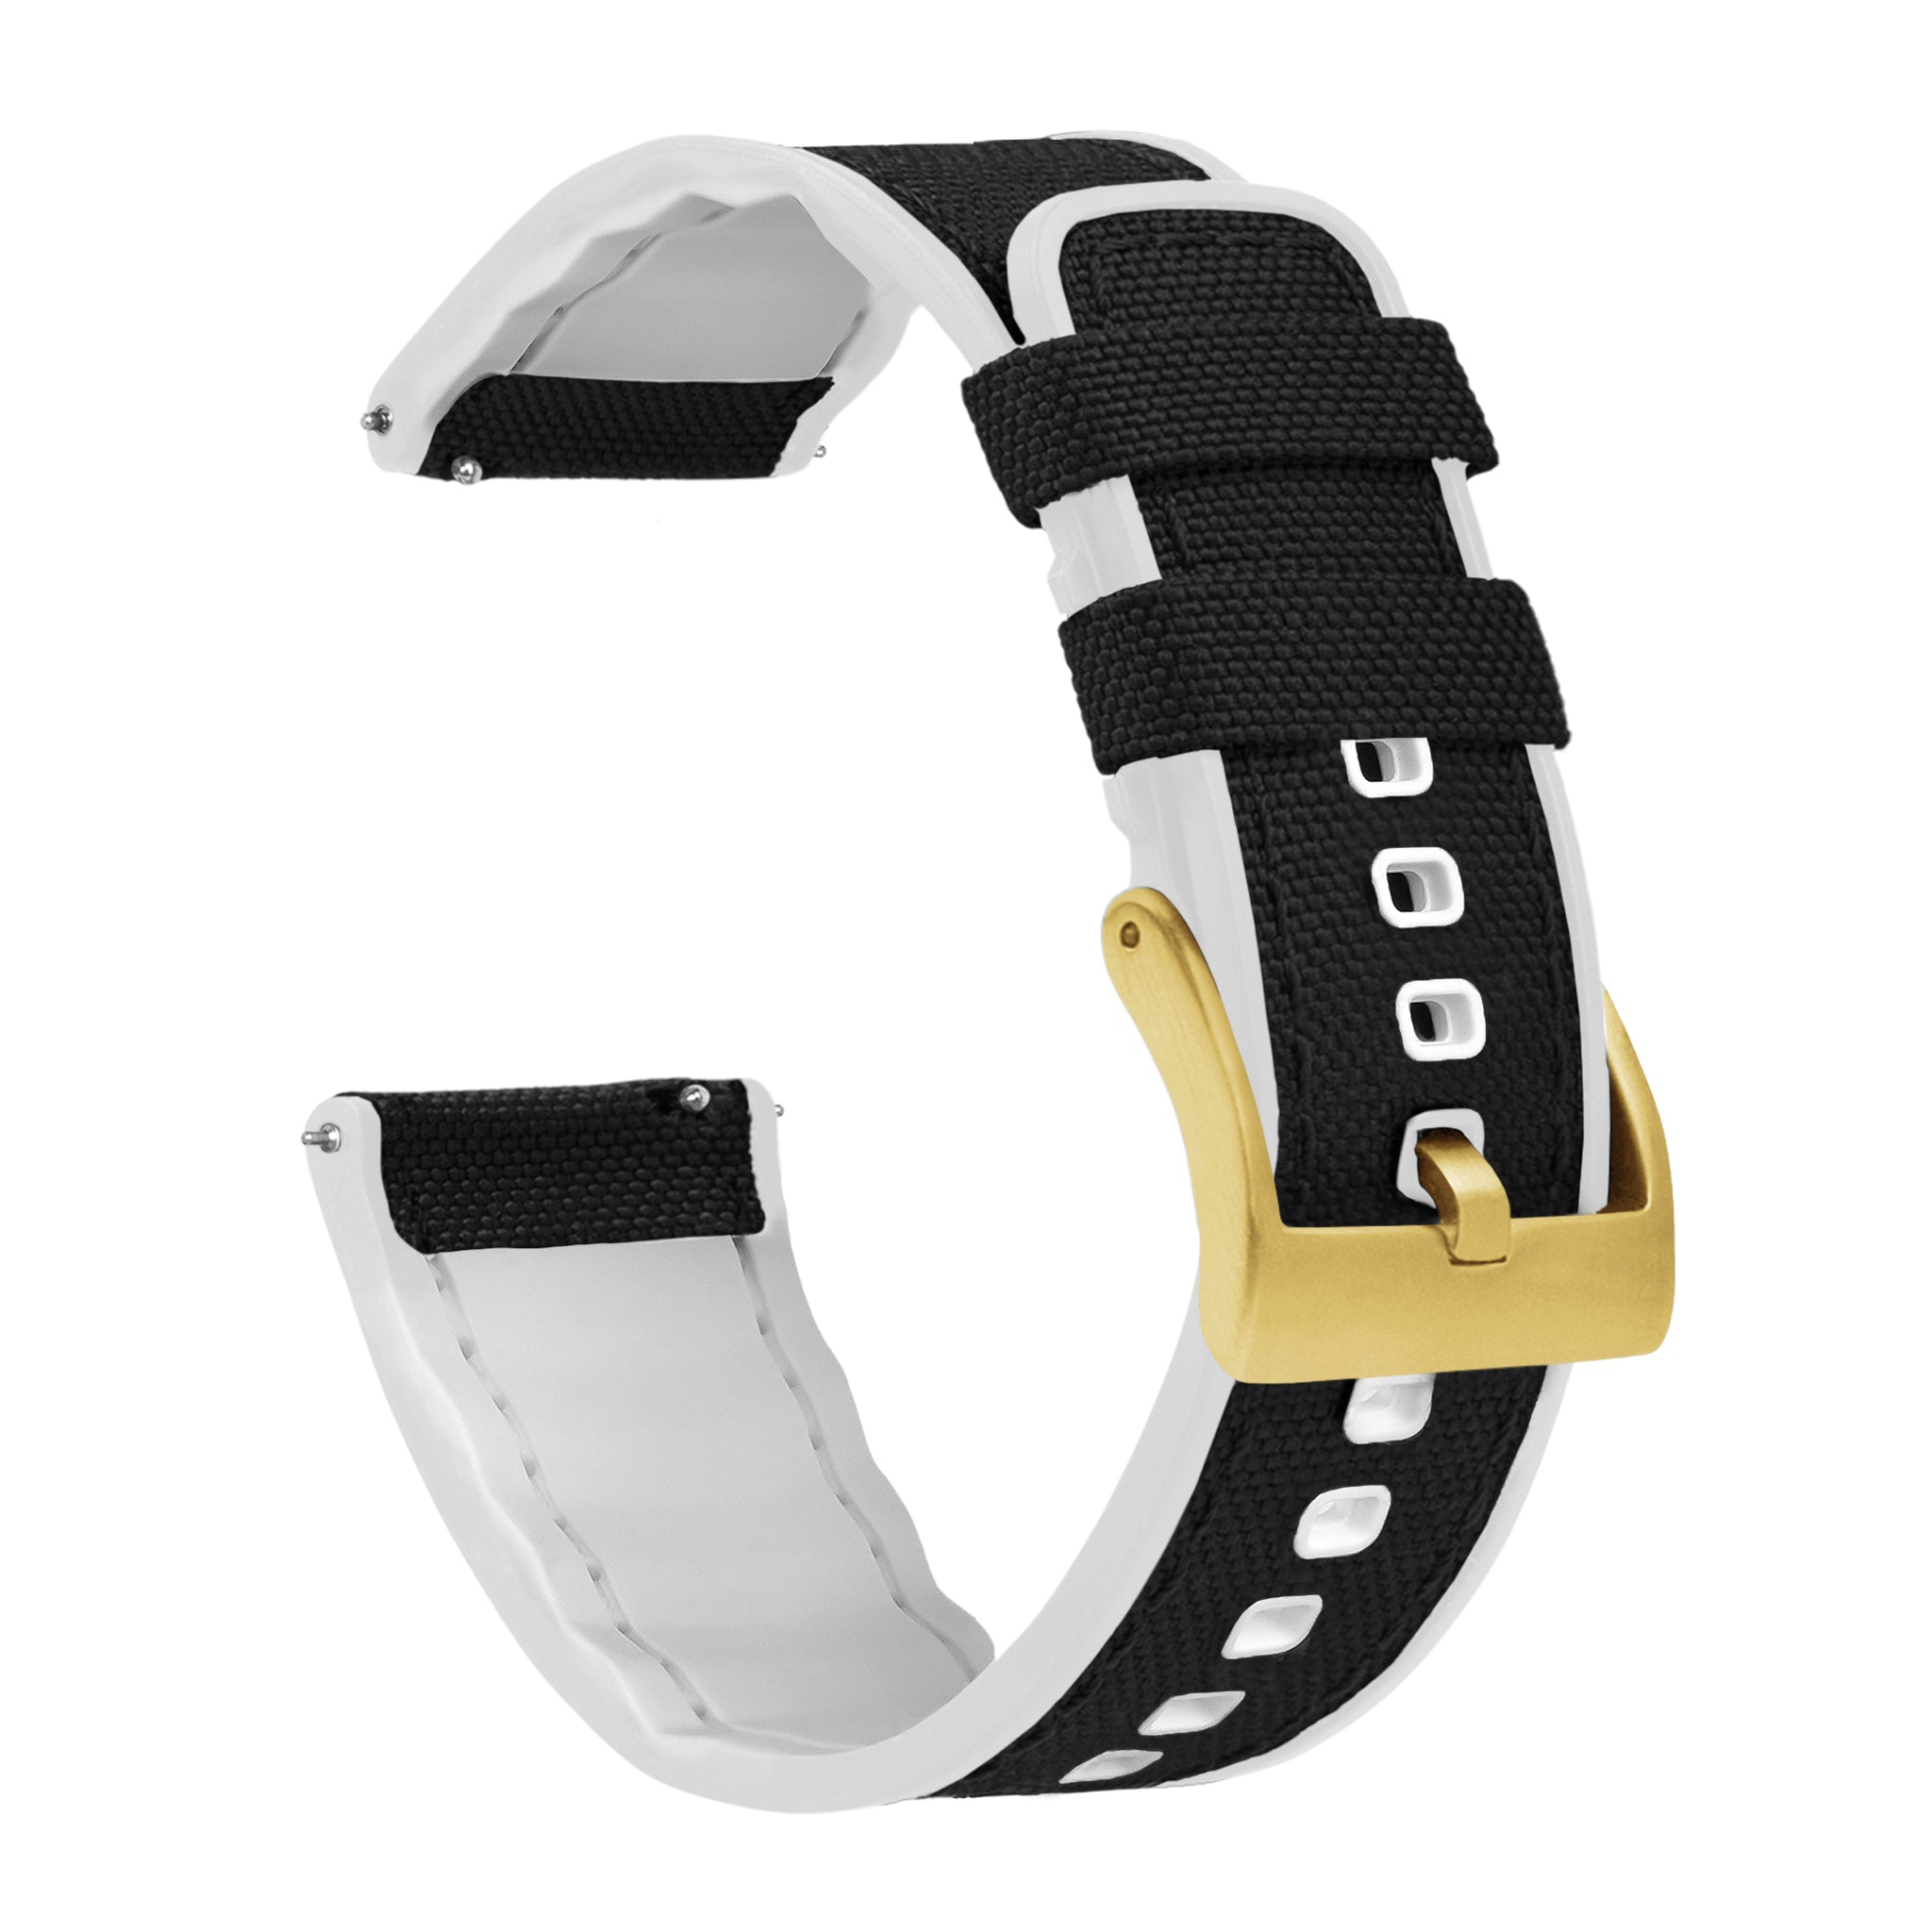 Black Cordura Fabric And White Silicone Hybrid Watch Band -